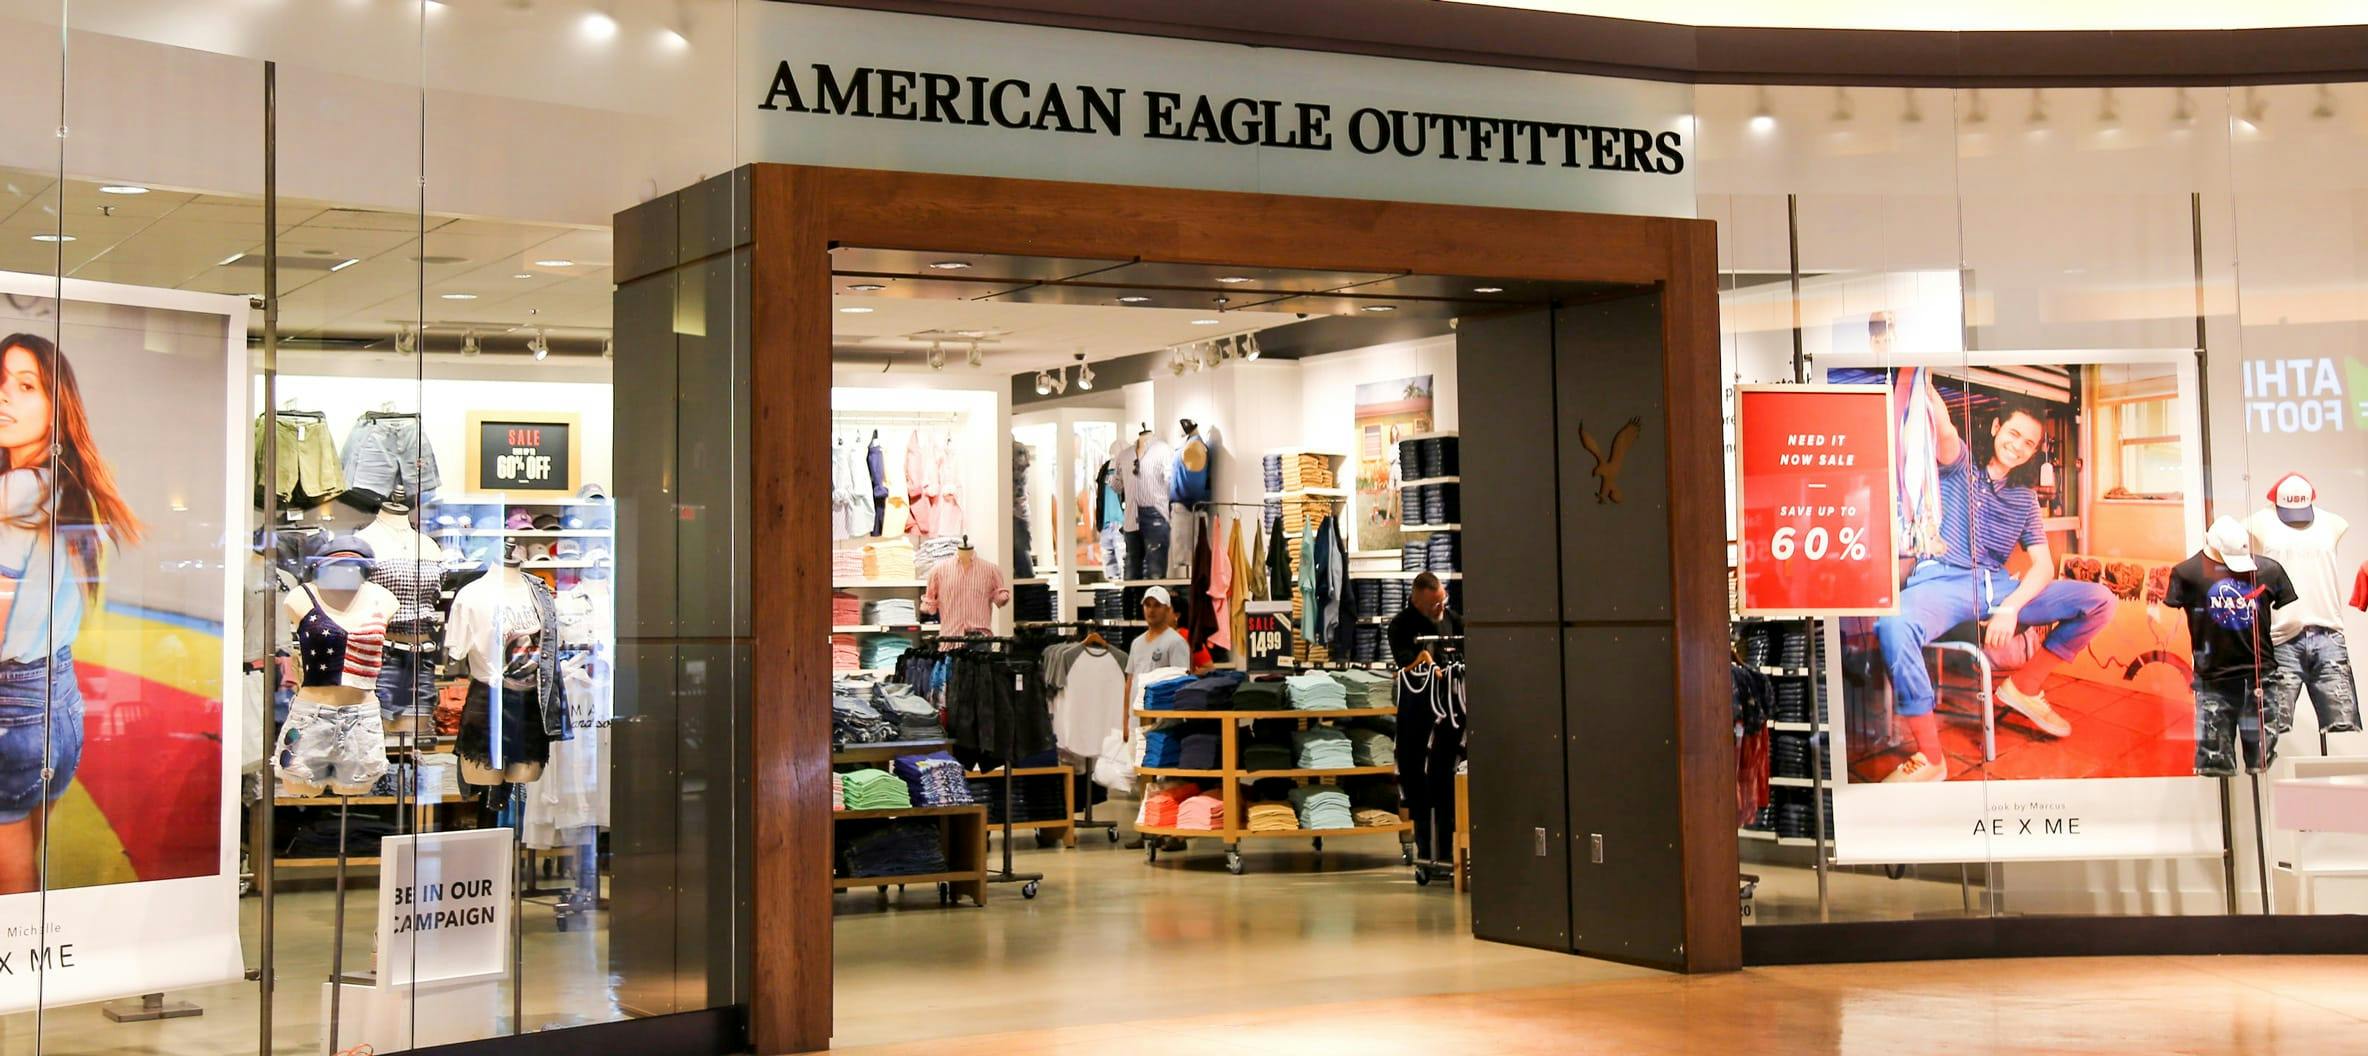 Американ игл. American Eagle одежда. Американ игл одежда в Москве. American Eagle магазин. American Eagle одежда Москва.